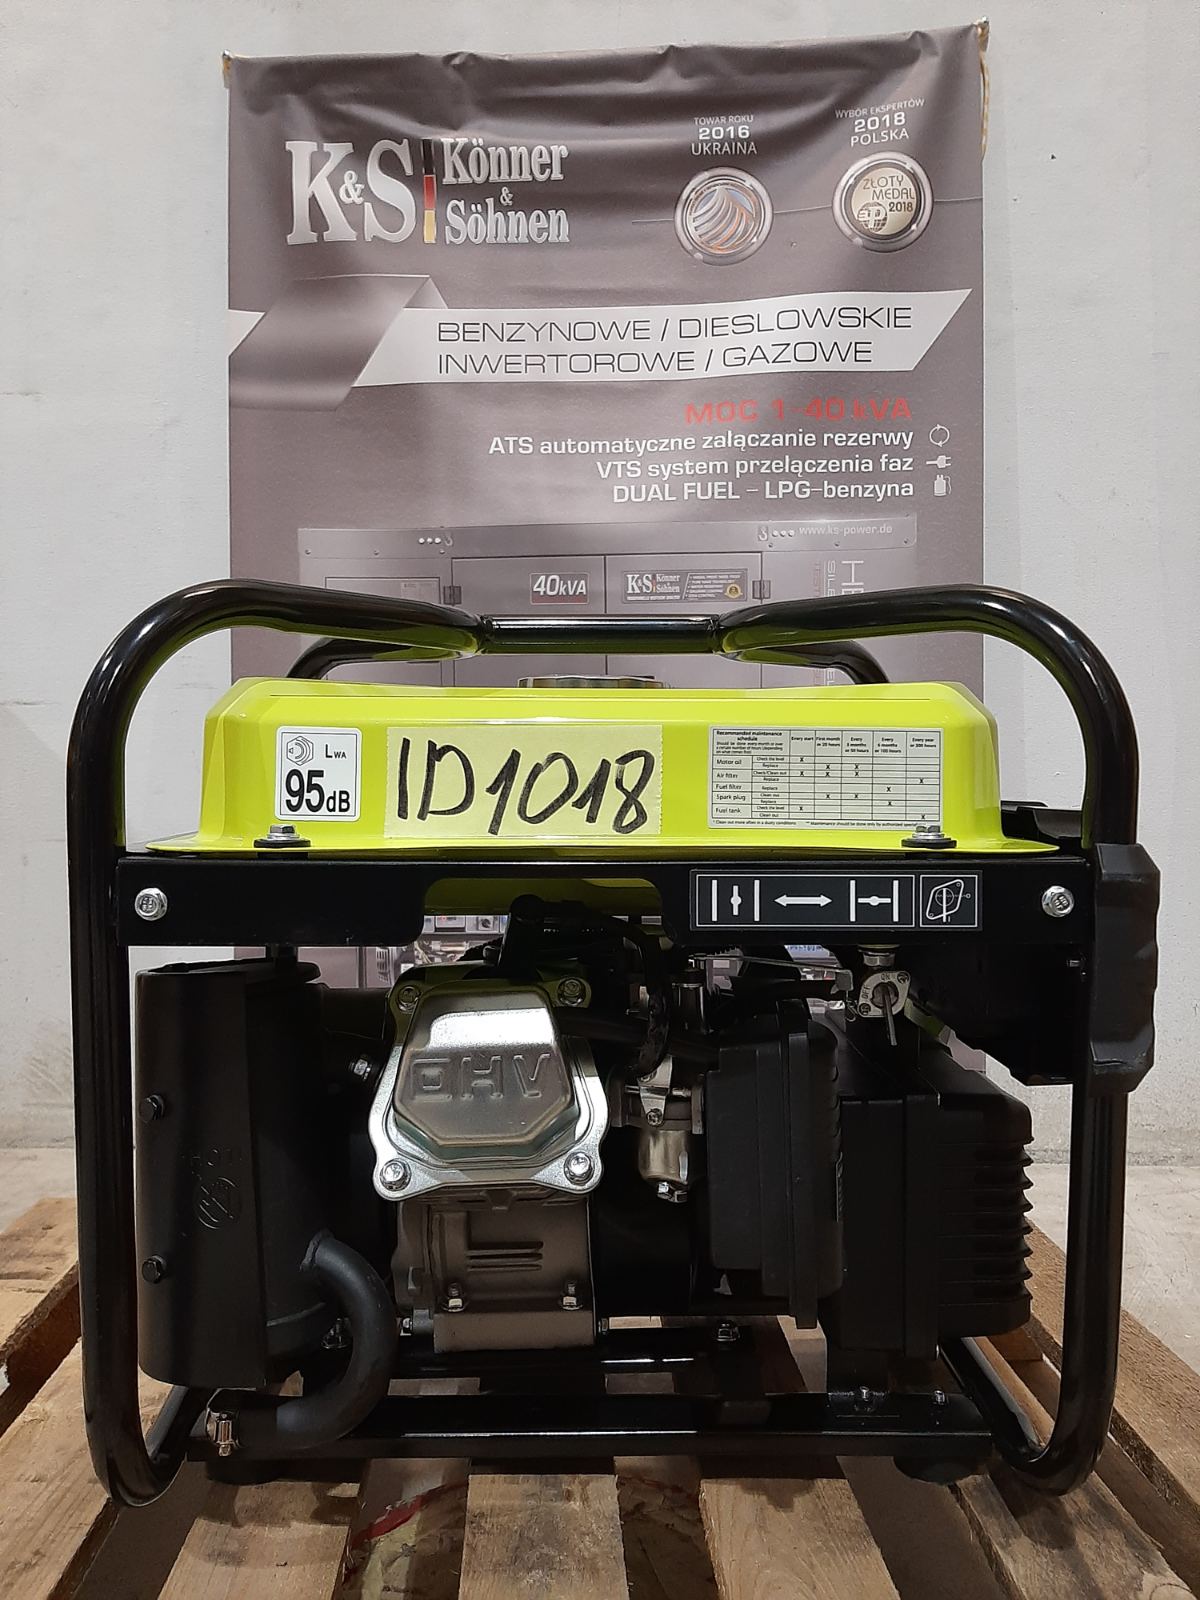 Inverter generator KSB 21i (ID 1018)